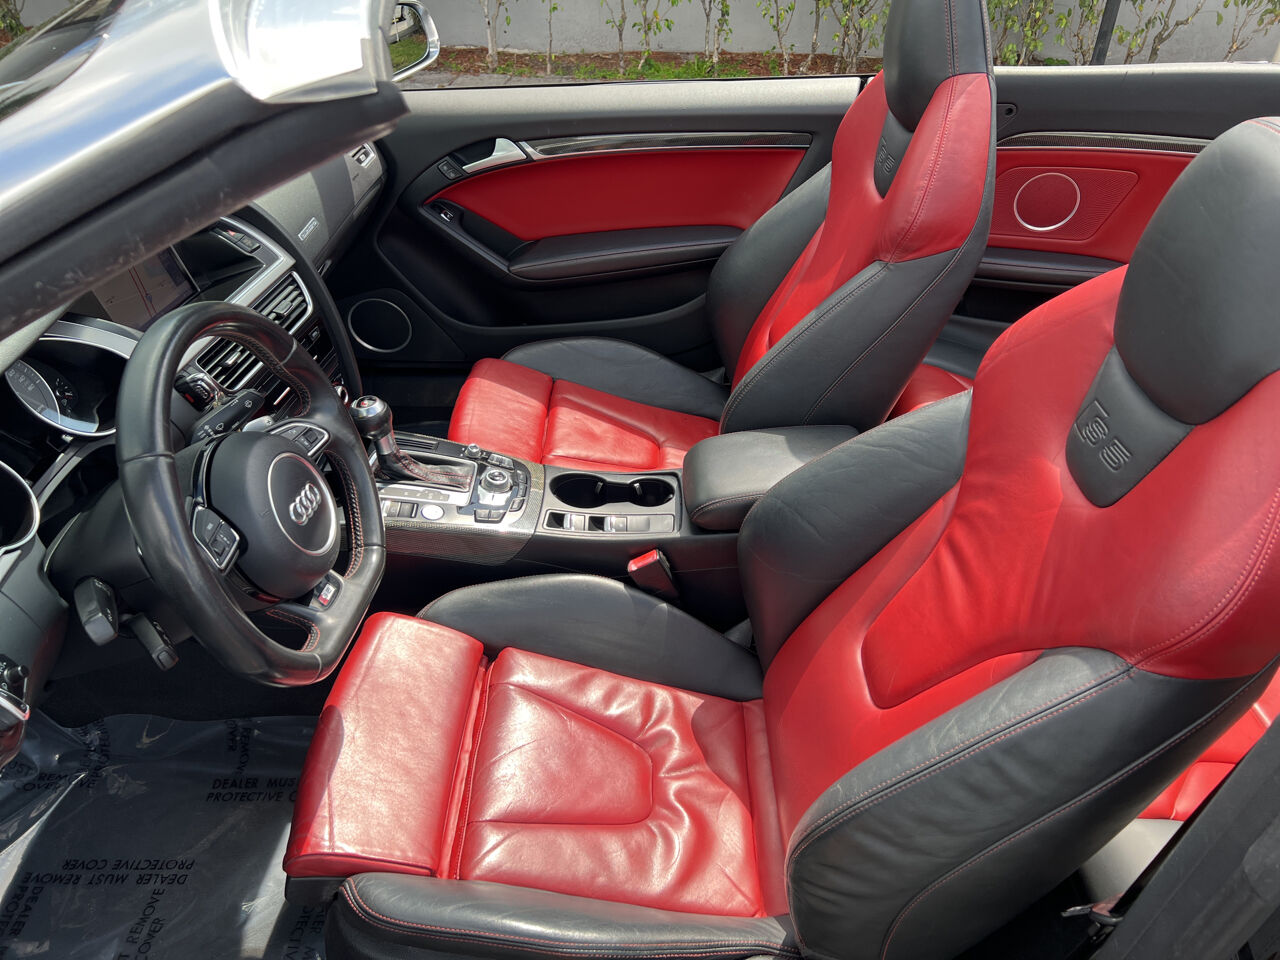 2013 AUDI S5 Convertible - $15,900